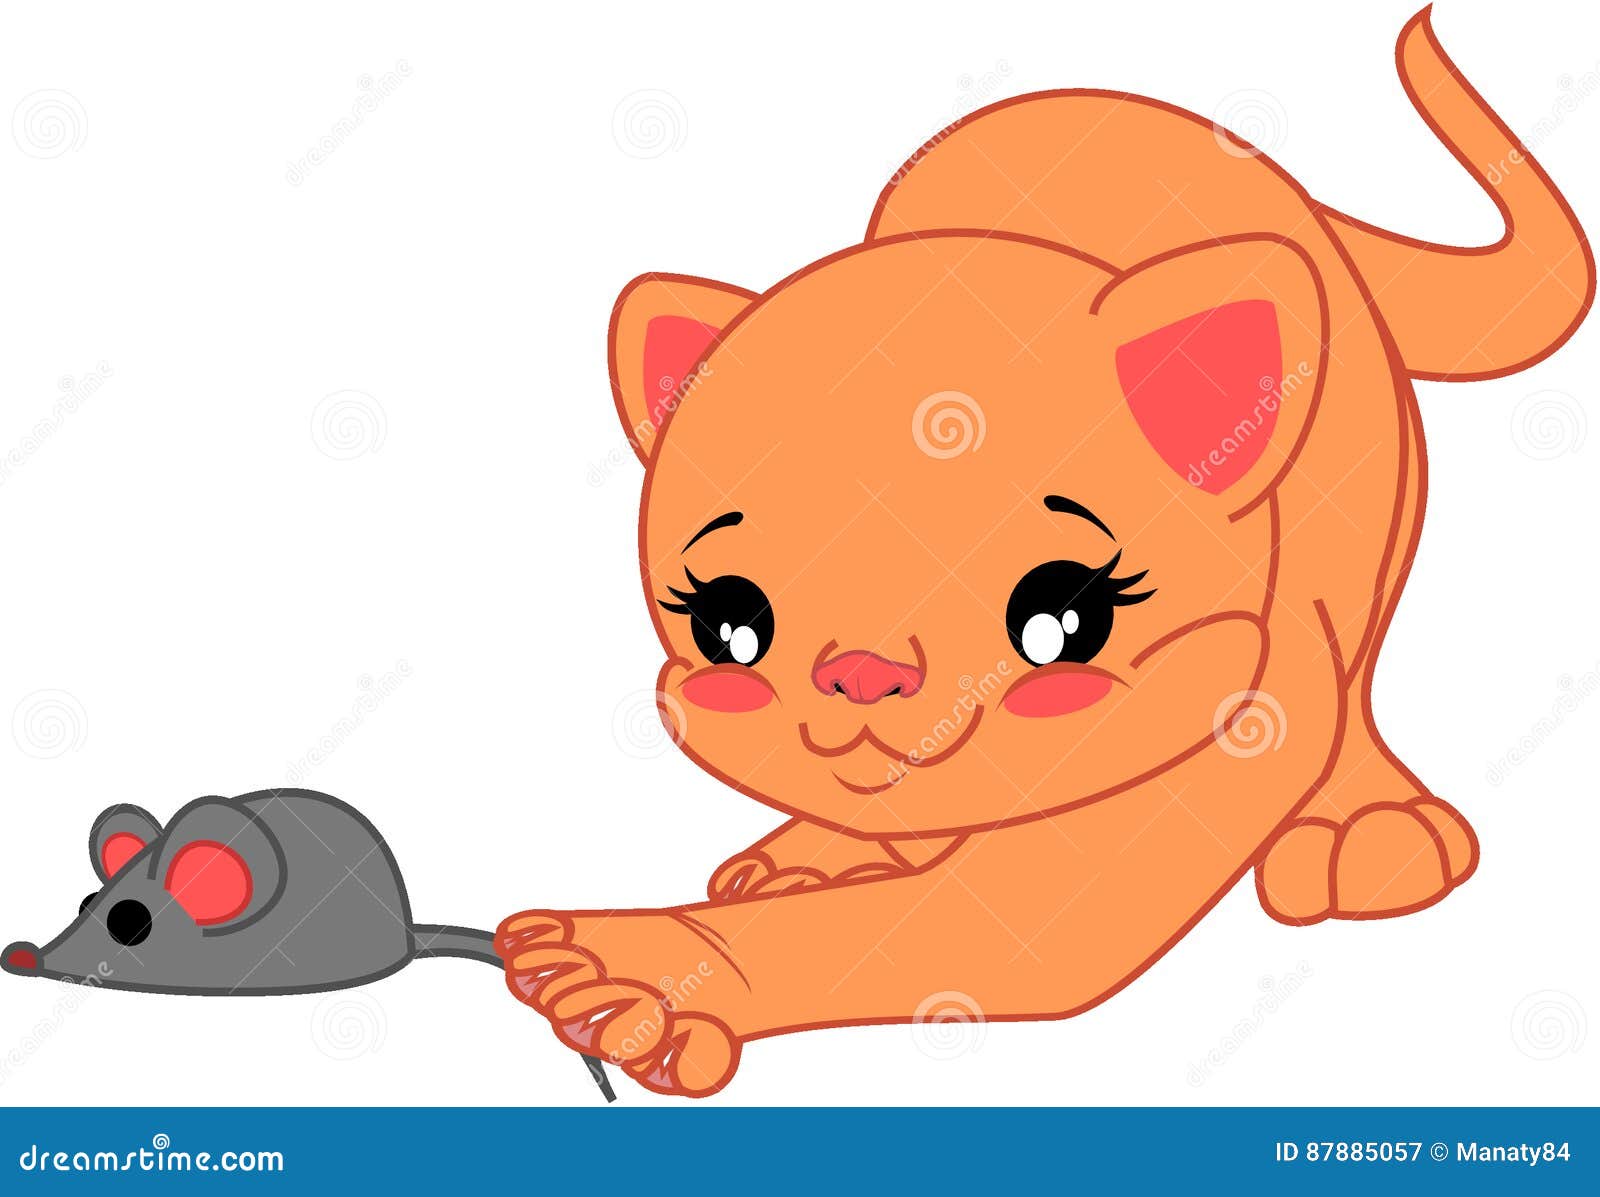 Cartoon Orange Cat and a Mouse Stock Vector - Illustration of nice, orange:  87885057